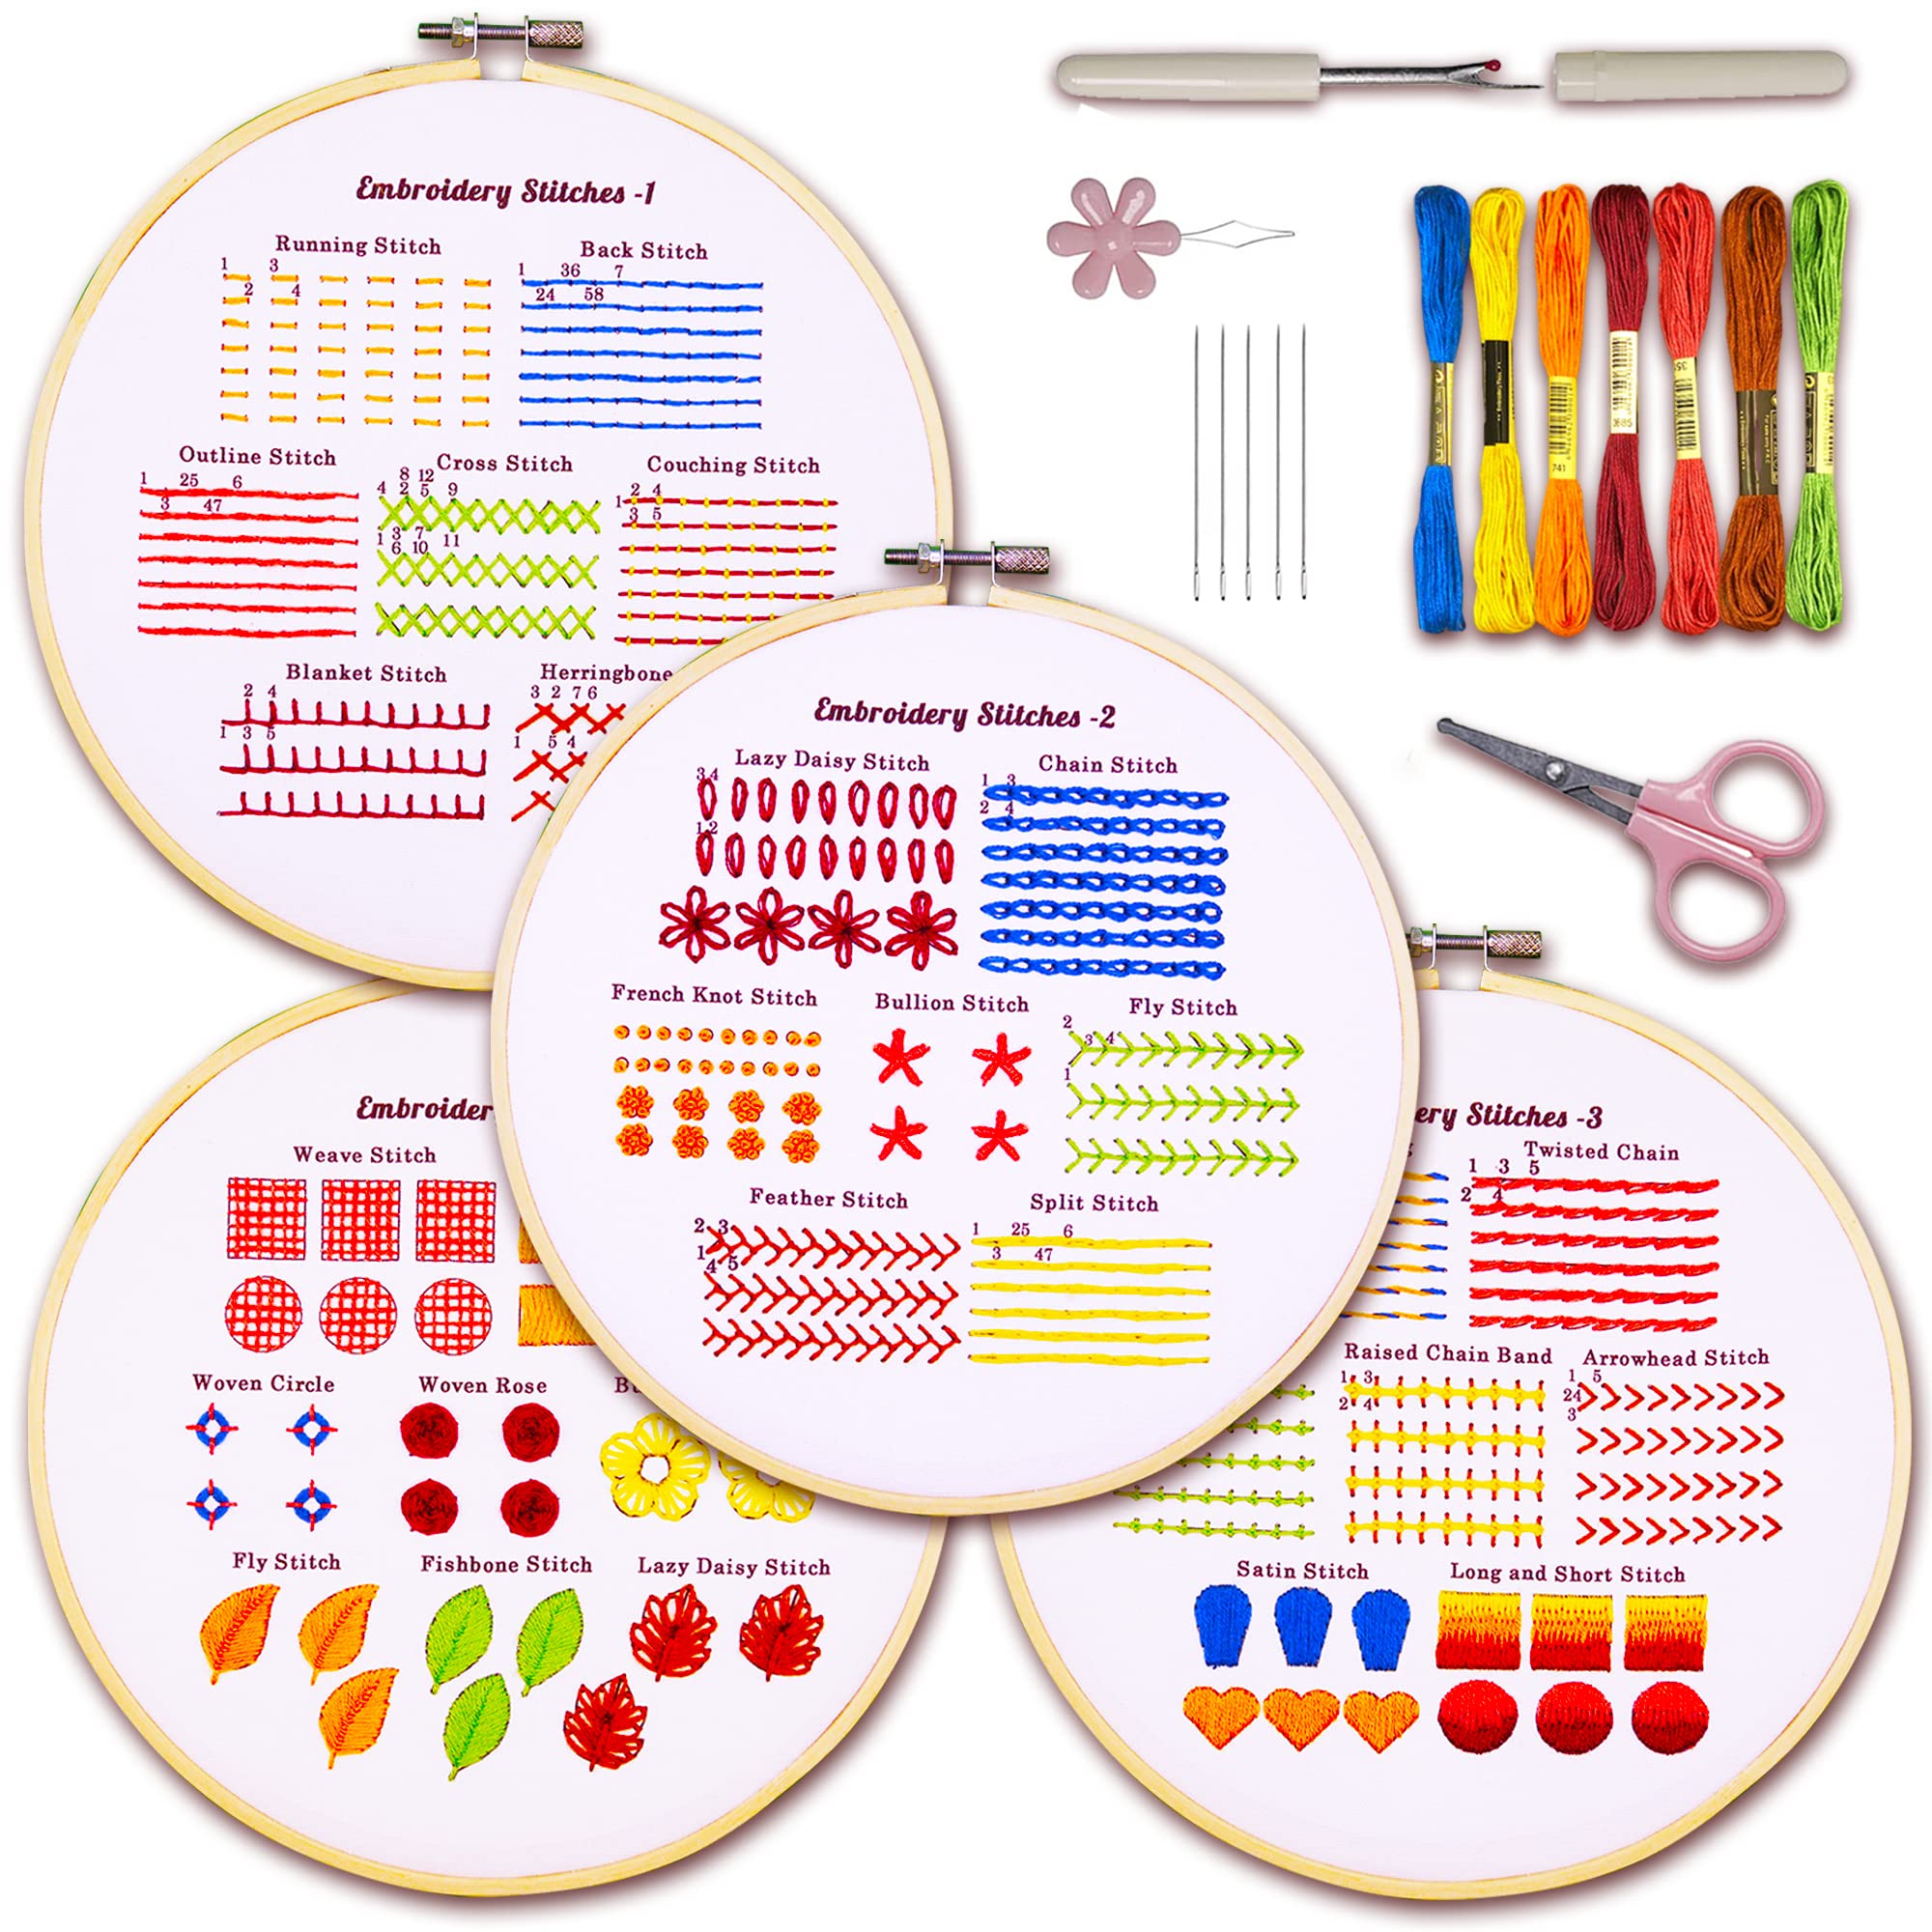 Bradove 4 Set Embroidery Stitches Practice Kit Embroidery Kit for Beginners  with Embroidery Patterns Beginner Embroidery Kit Embroidery Kits for Adults  Hand Embroidery Kit Embroidery Kit for Kids